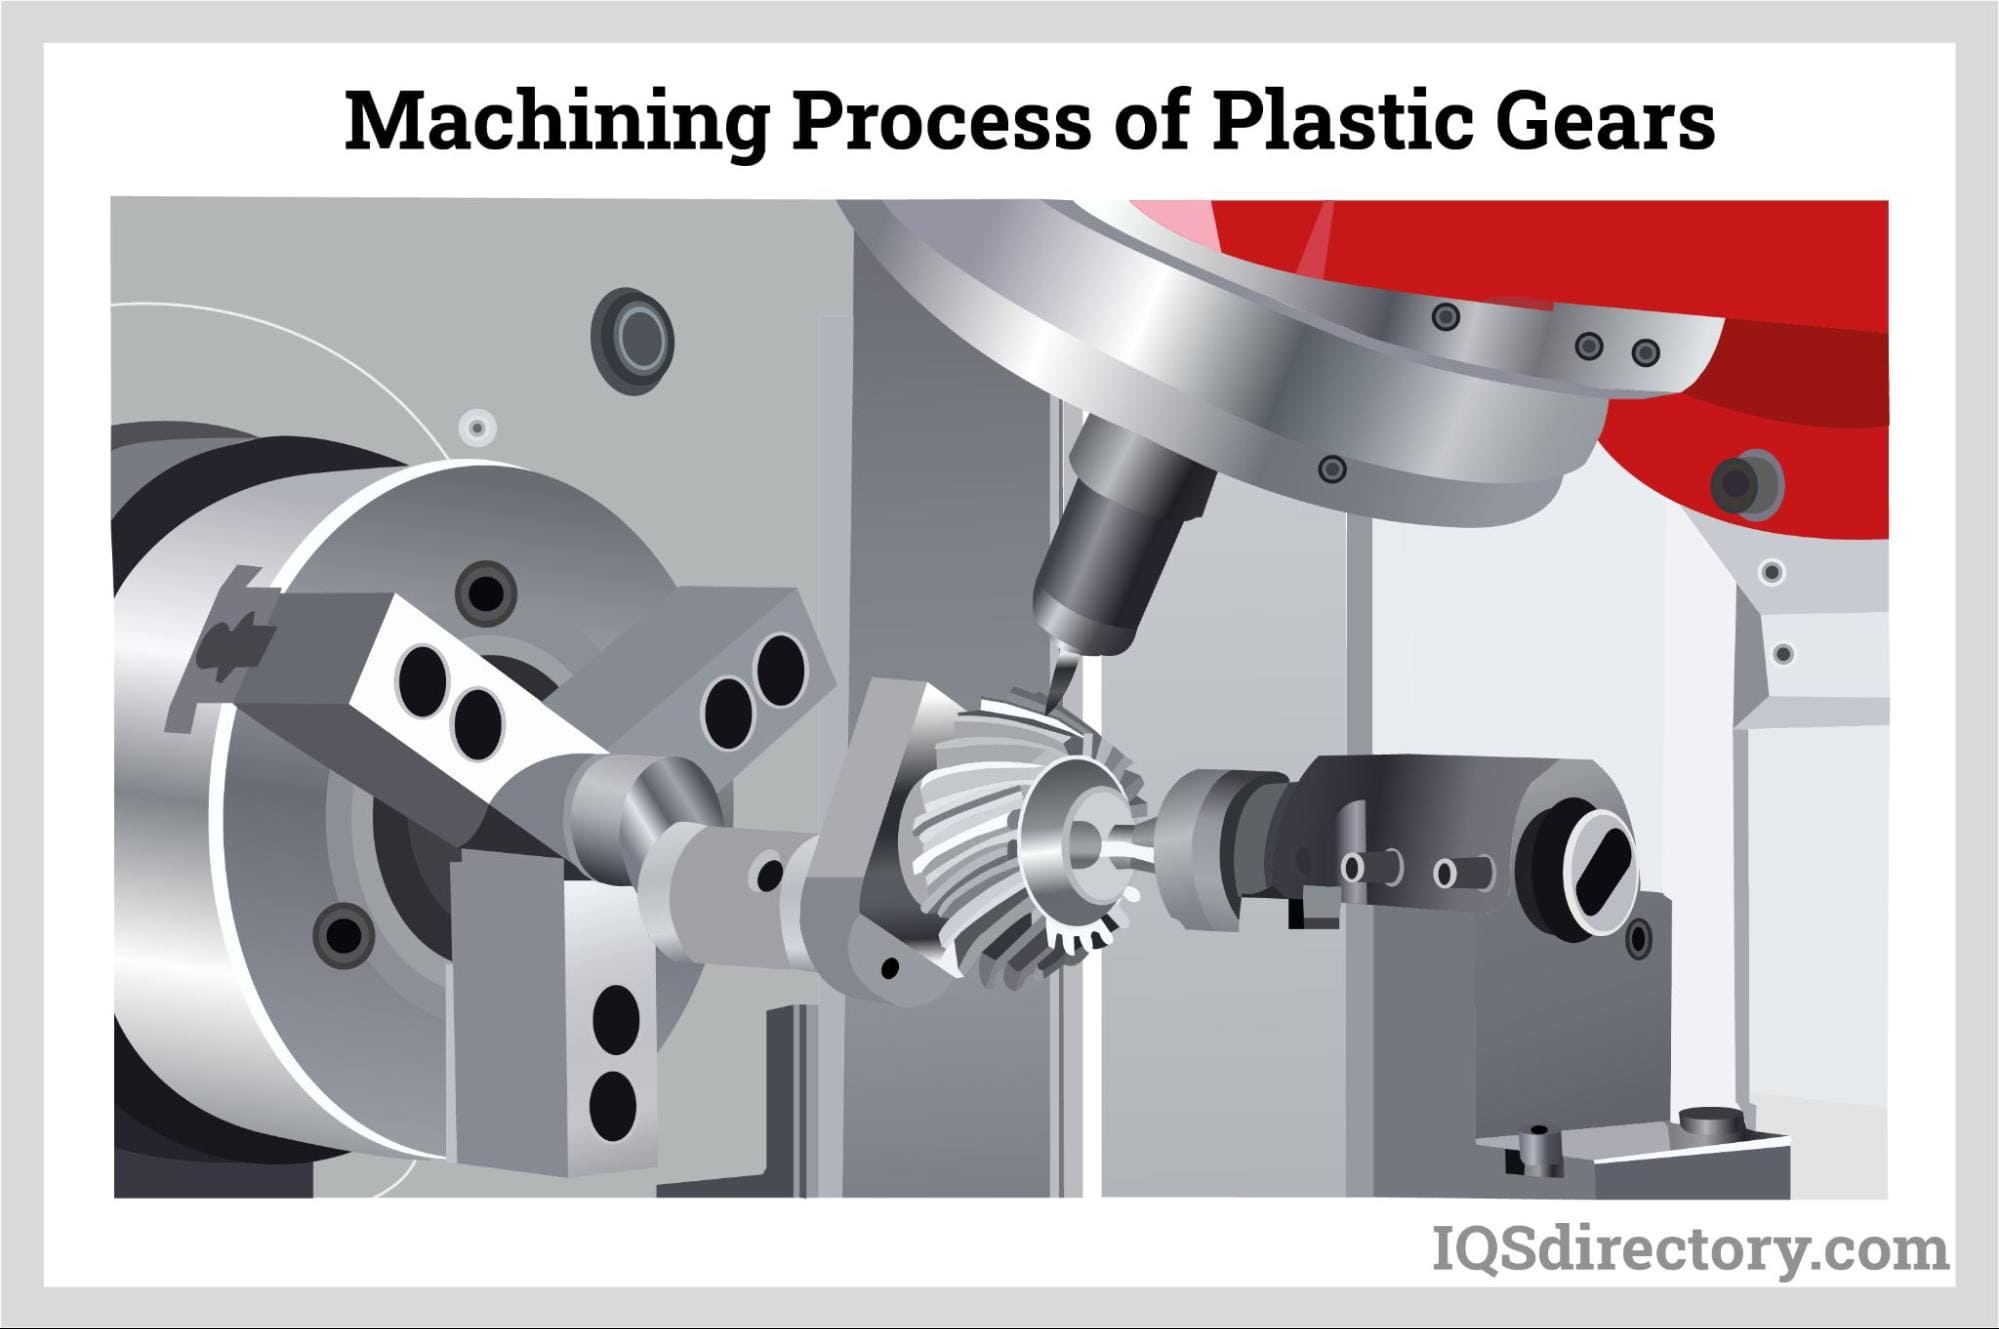  Machining Process of Plastic Gears